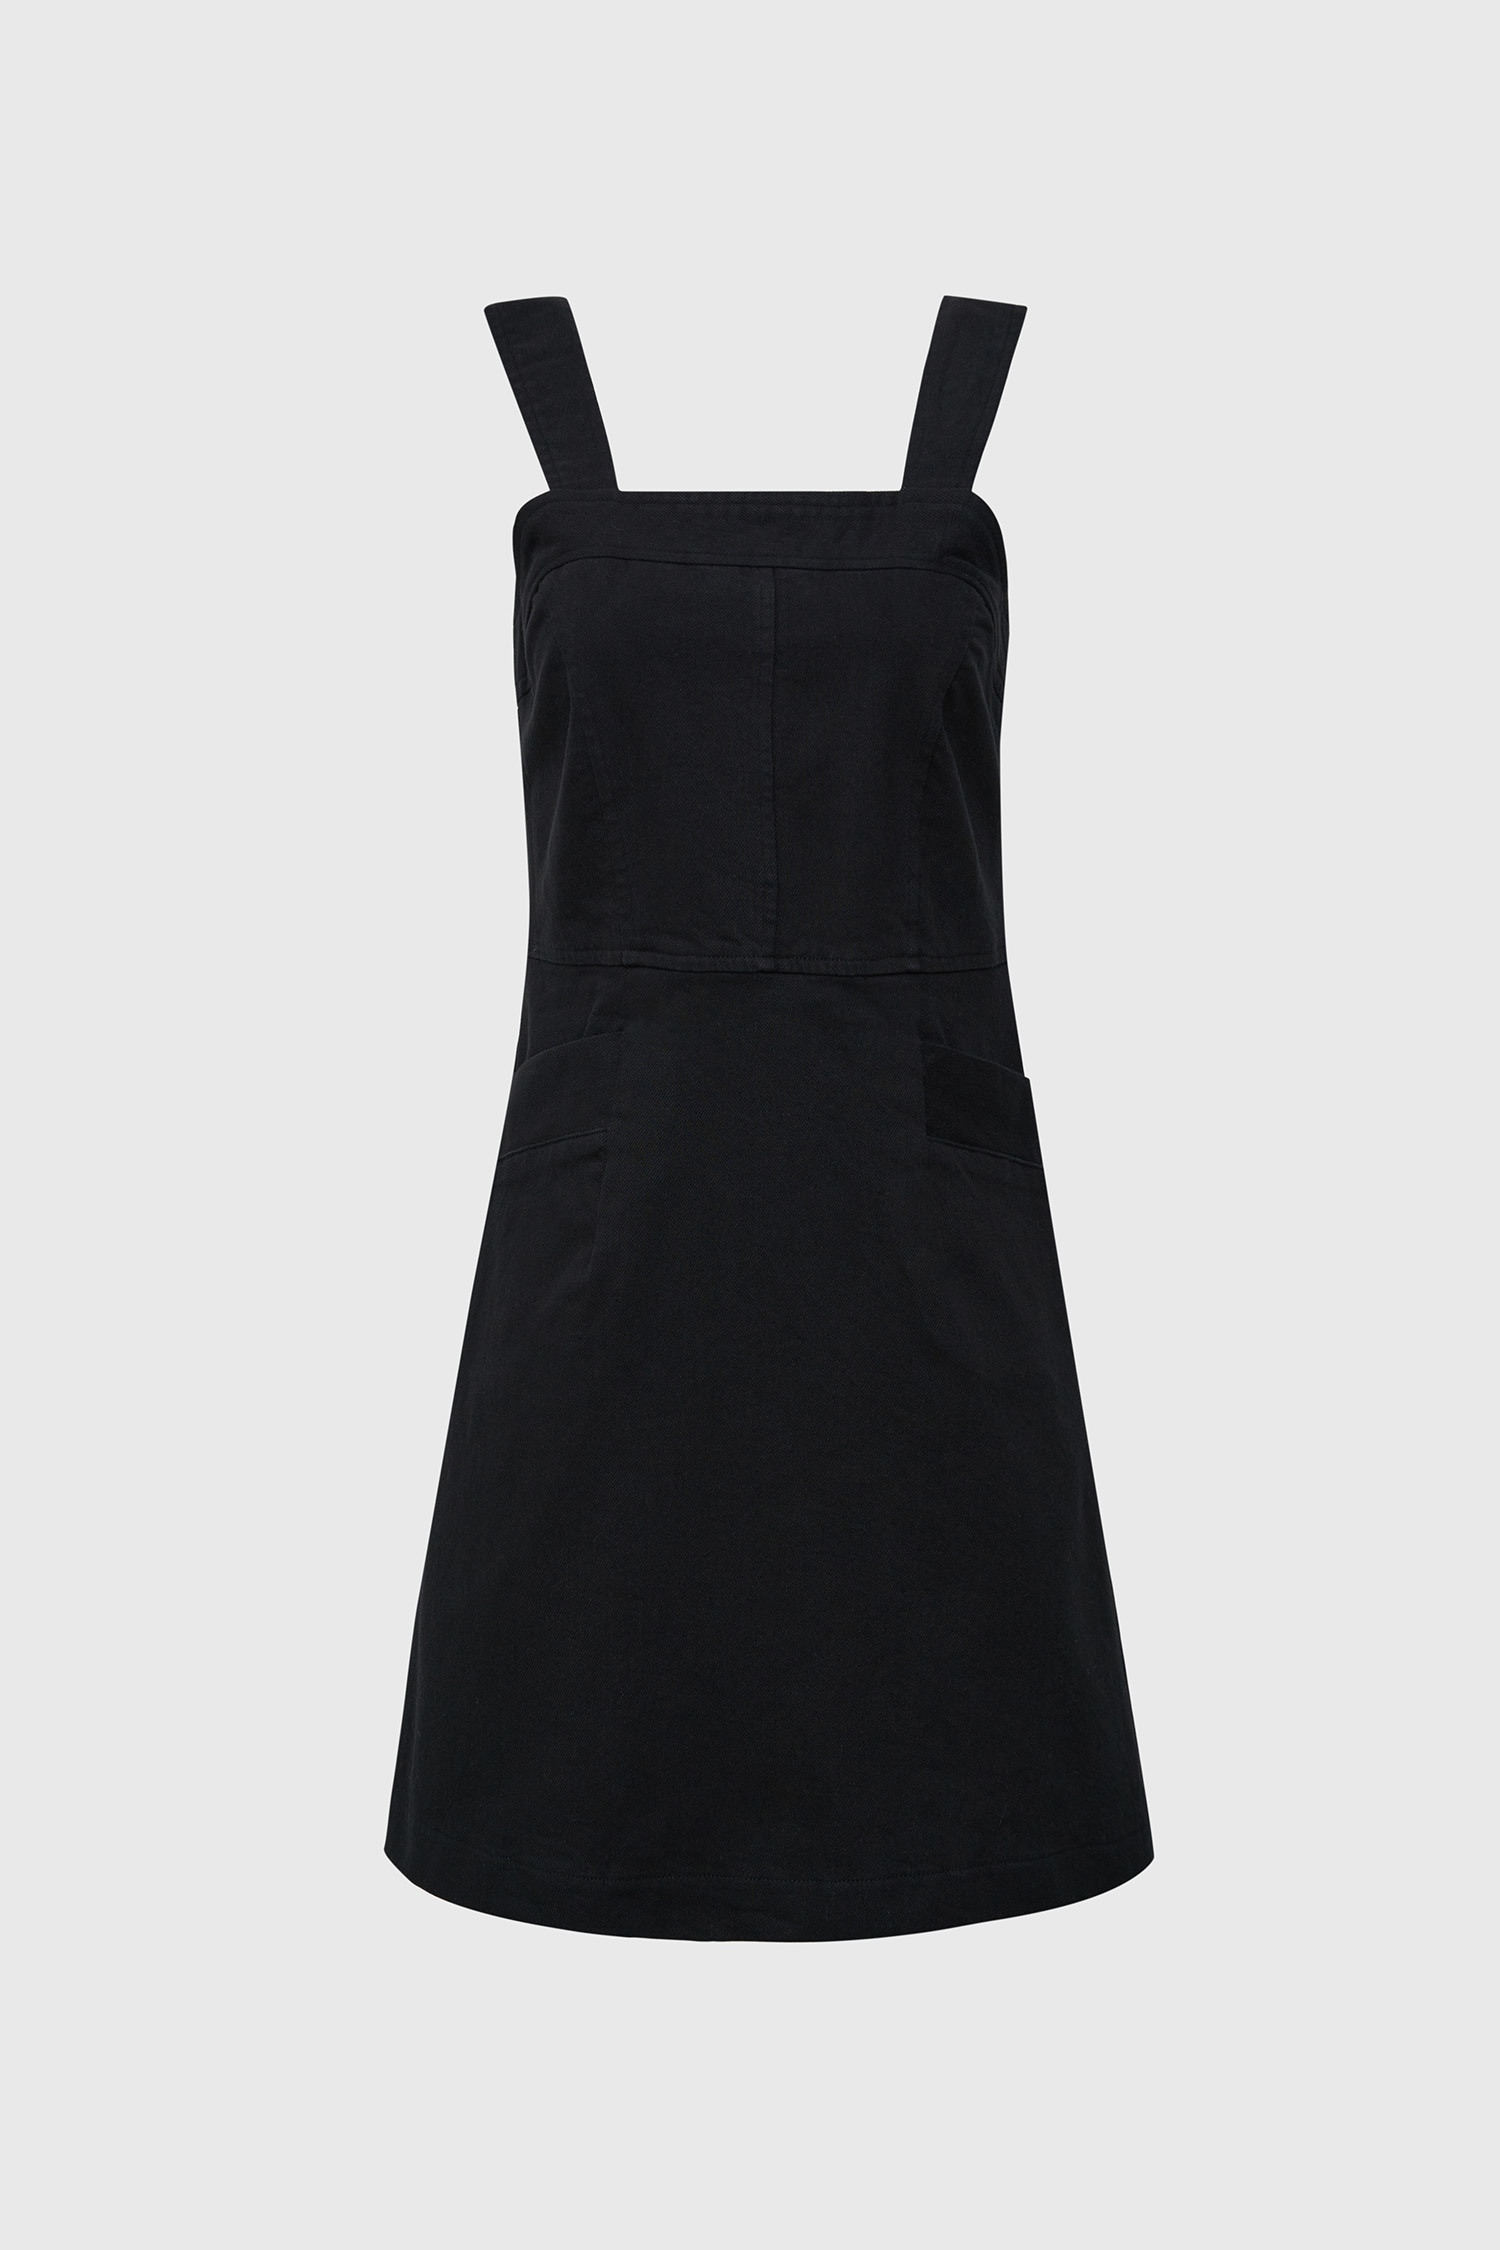 Mim sholder strap mini dress - black